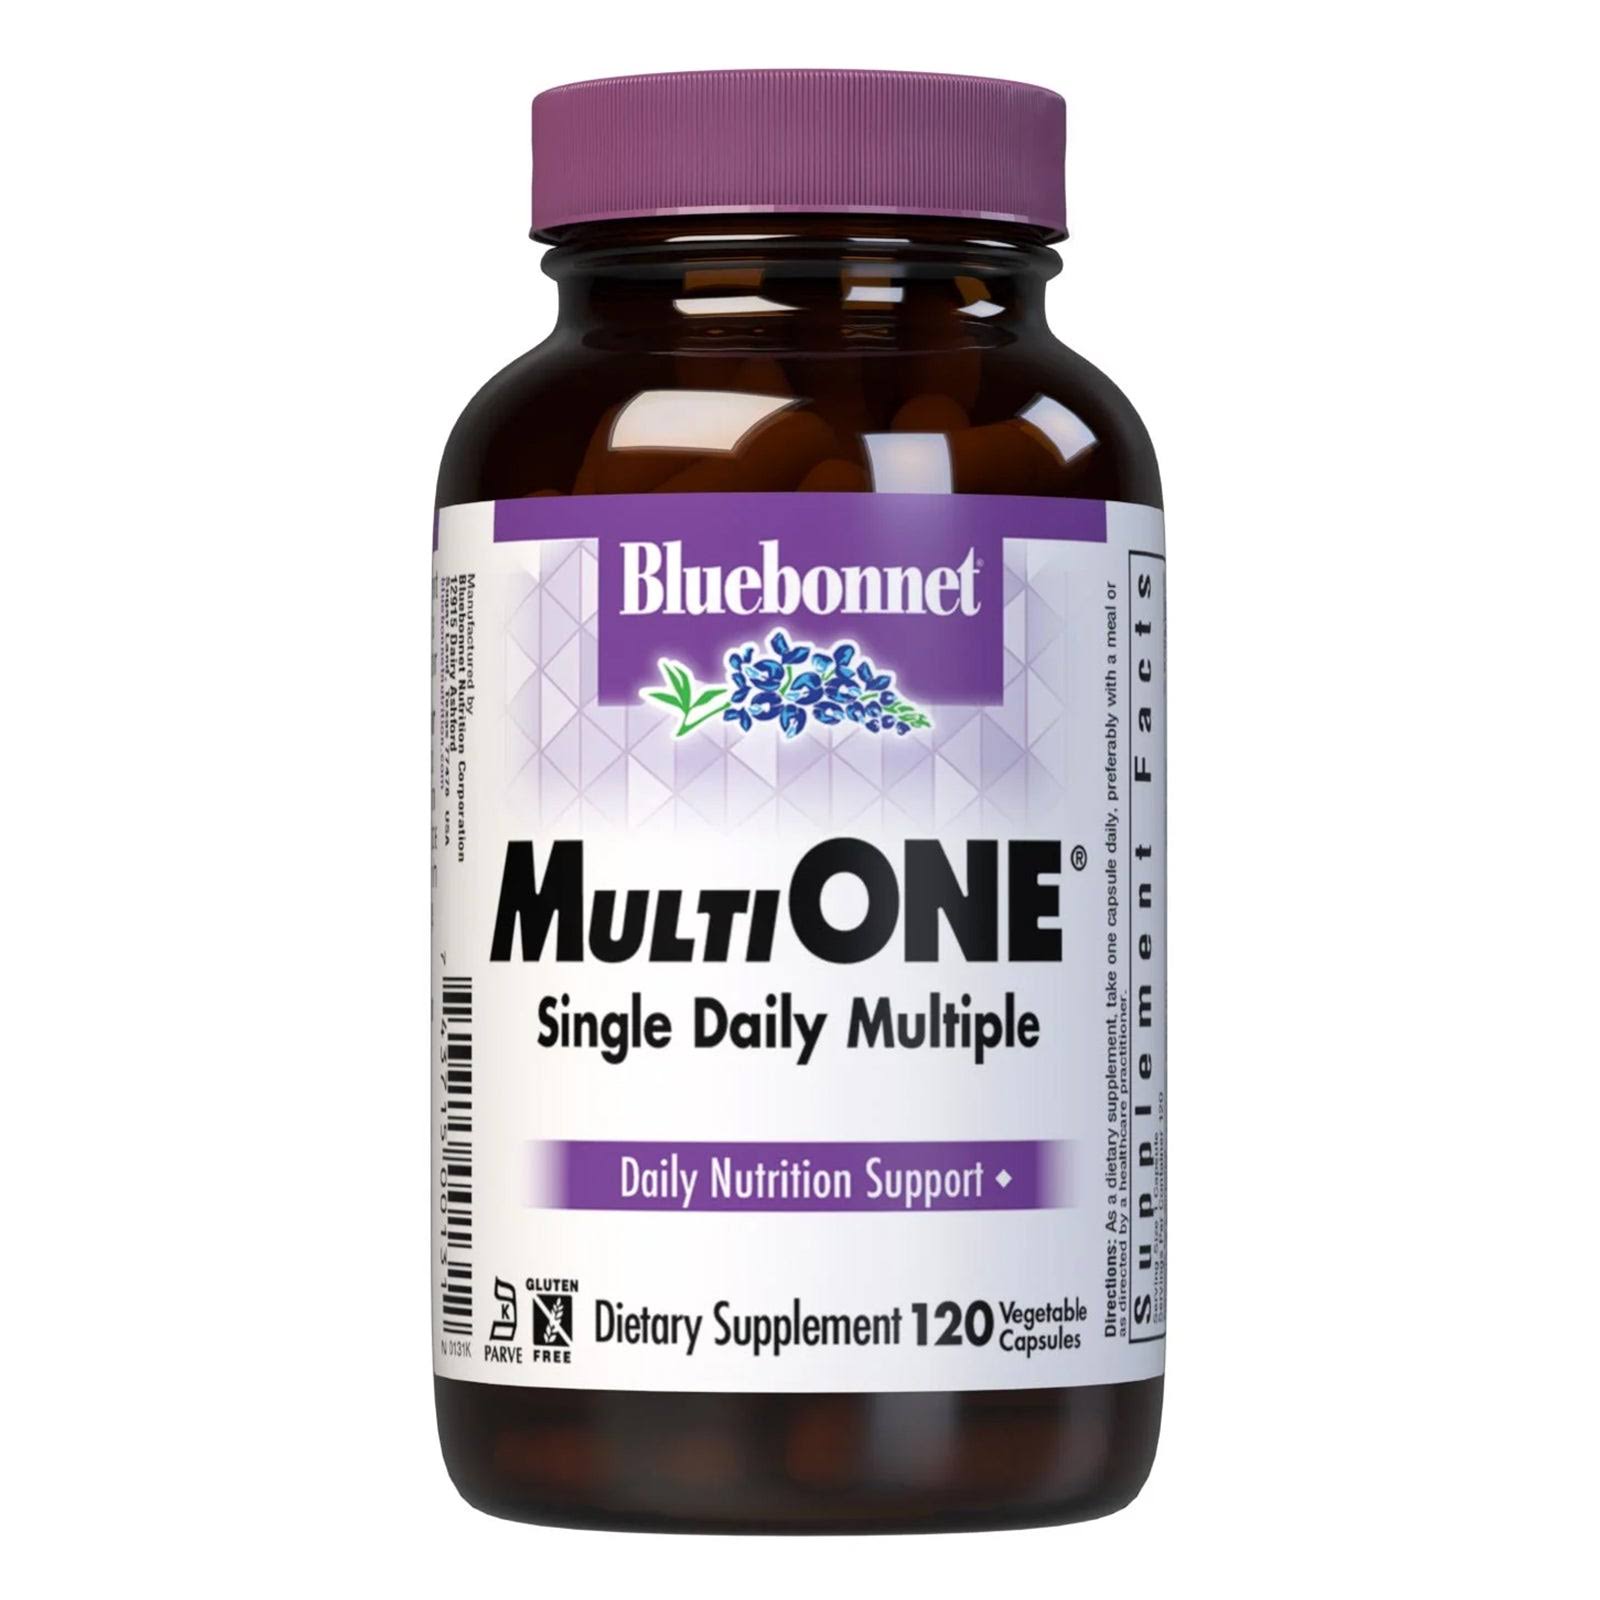 Bluebonnet Multi One Dietary Supplement - 120 Capsule